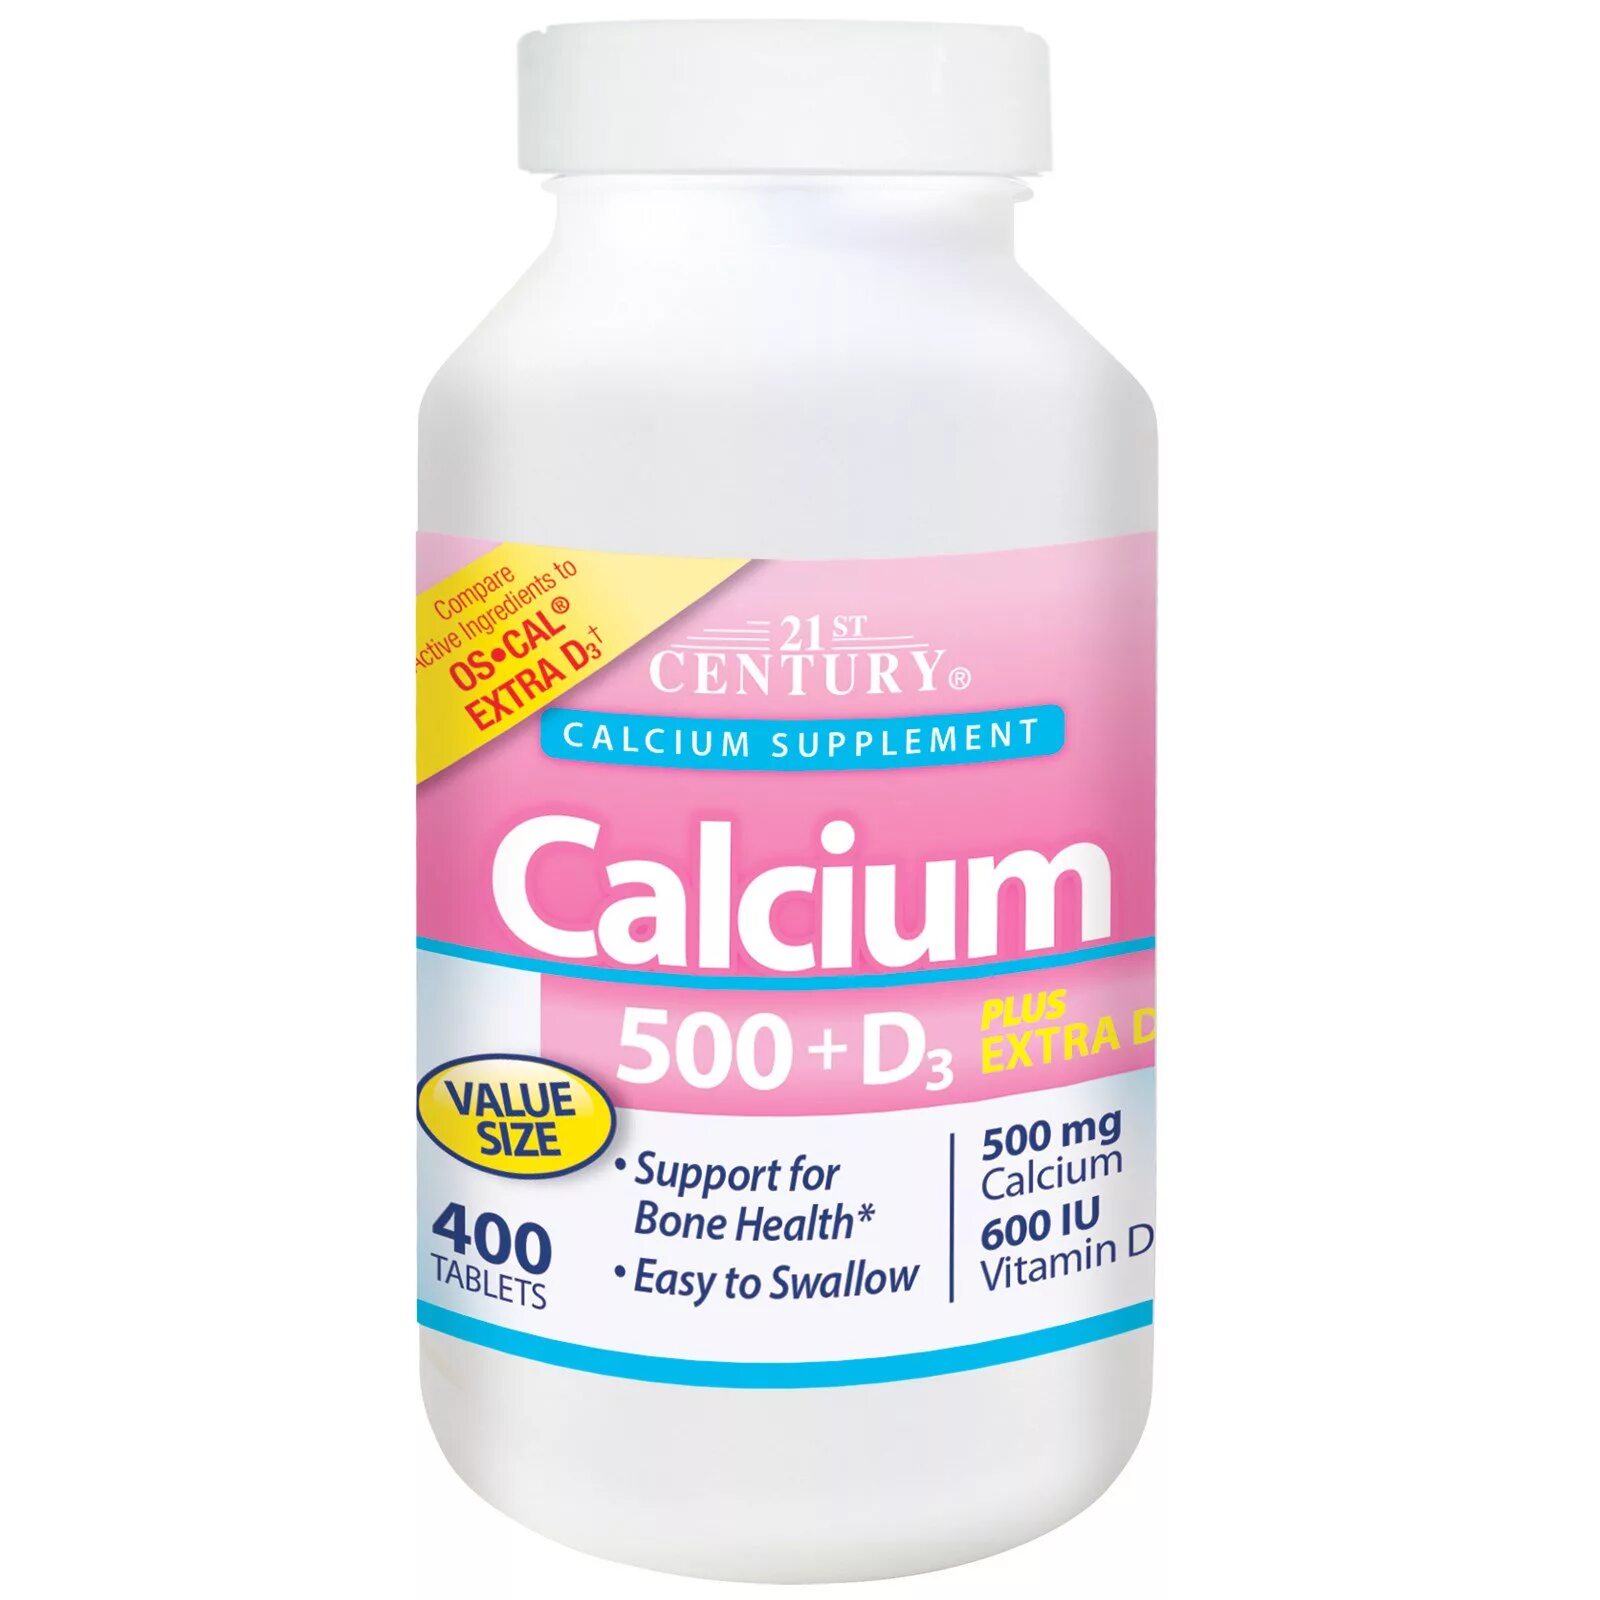 Д3 15 мкг. Кальций д3 Calcium d3. 21st Century, Calcium Citrate d3, 400 таб.. 21st Century Calcium Citrate maximum (цитрат кальция) + d3 400 капсул. Кальциум цитрат витамин д3.